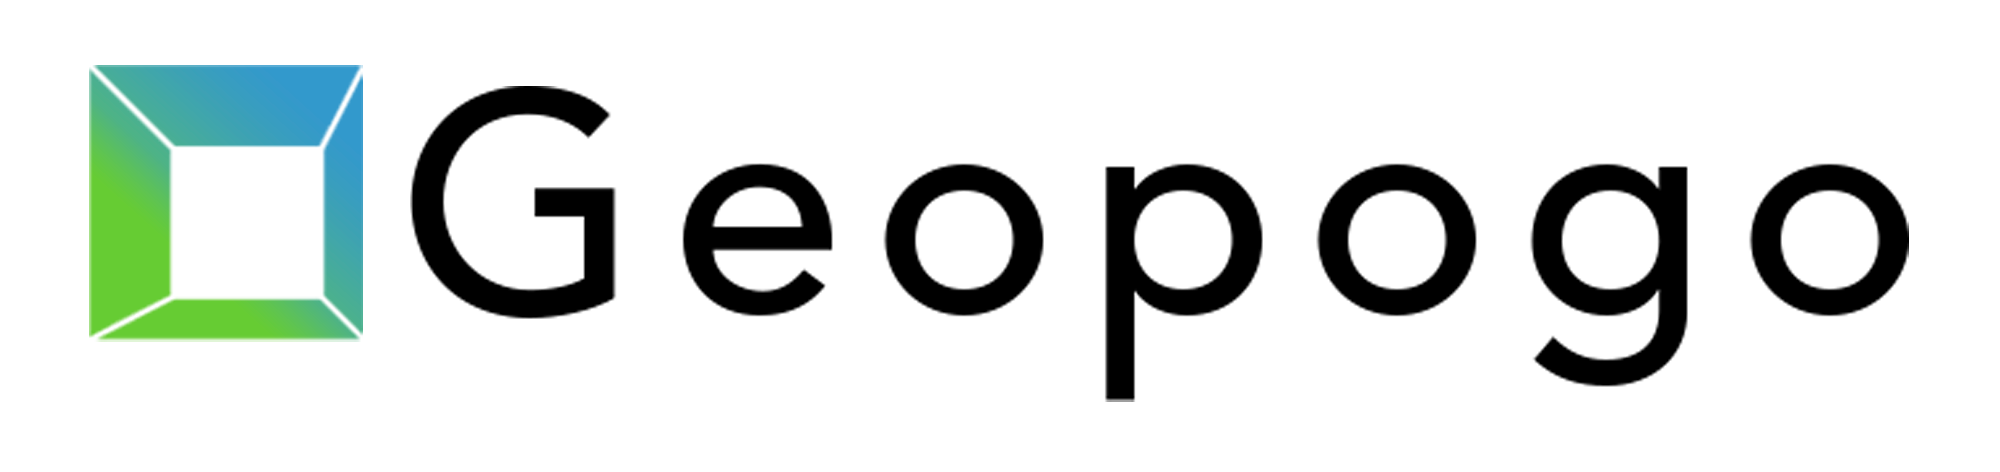 geopogo logo